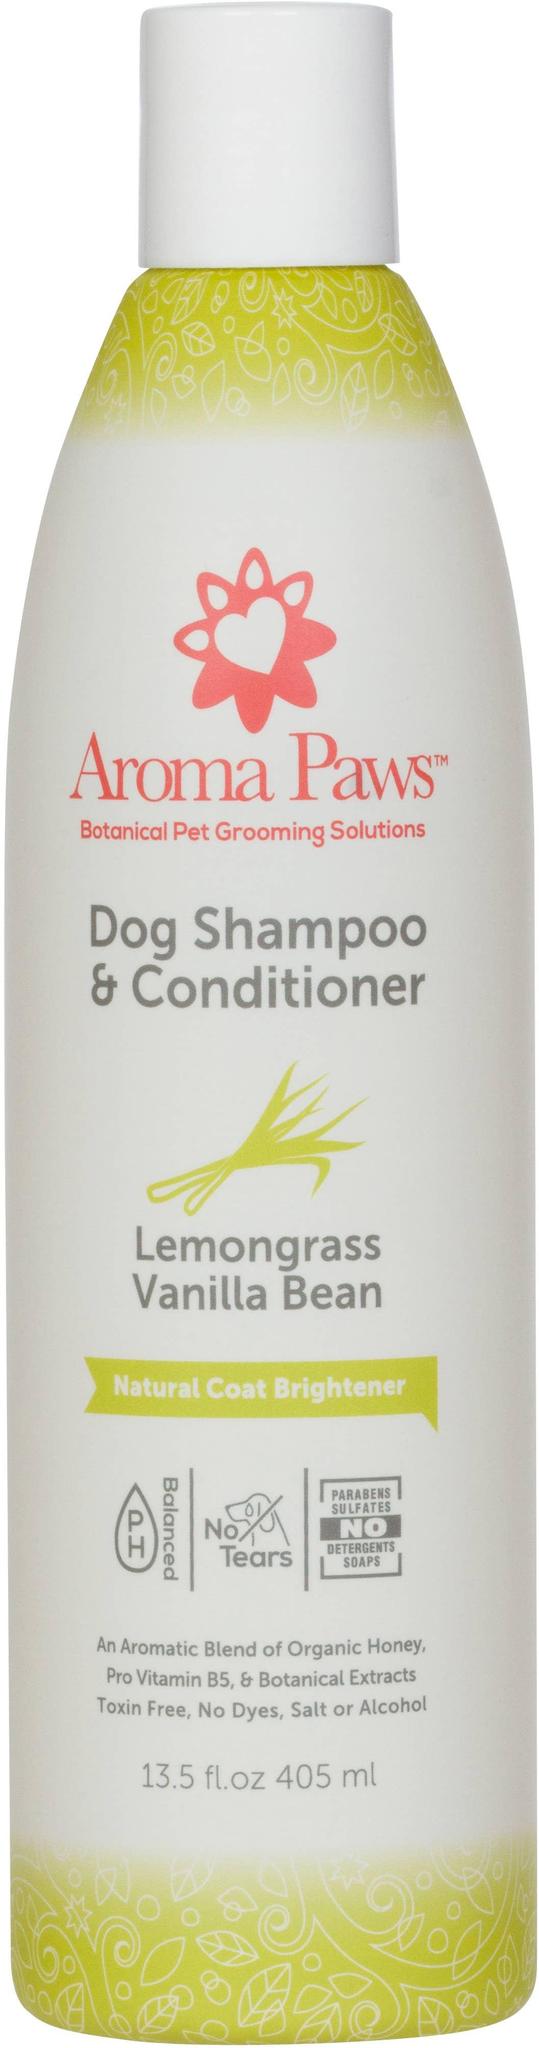 Aroma Paws Lemongrass Vanilla Bean Shampoo